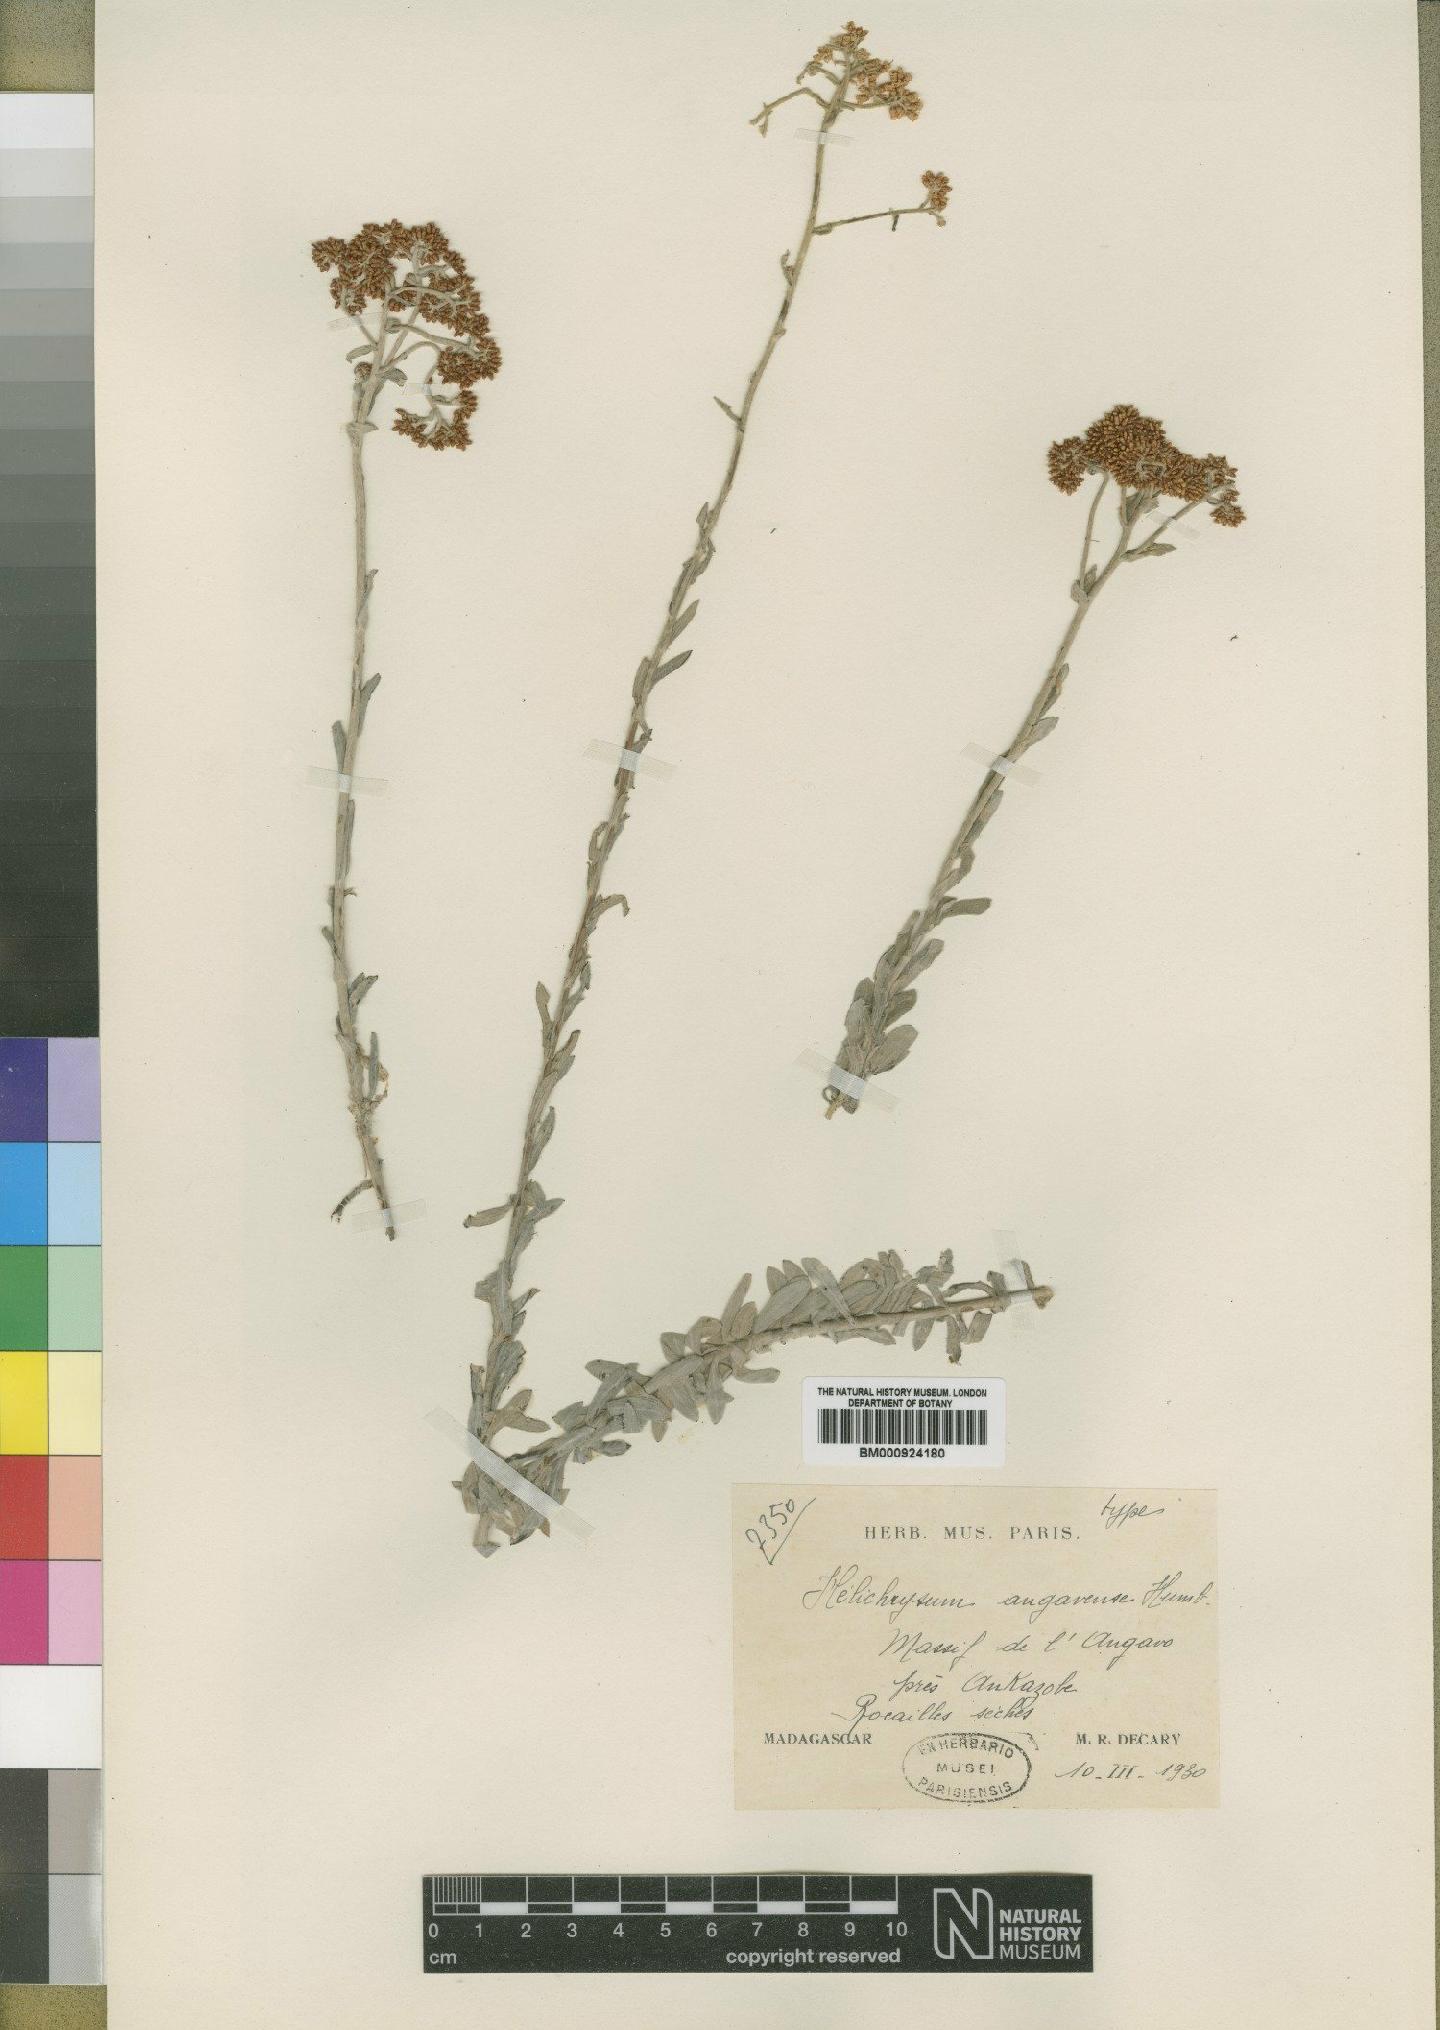 To NHMUK collection (Helichrysum angavense Humbert; Type; NHMUK:ecatalogue:4529208)